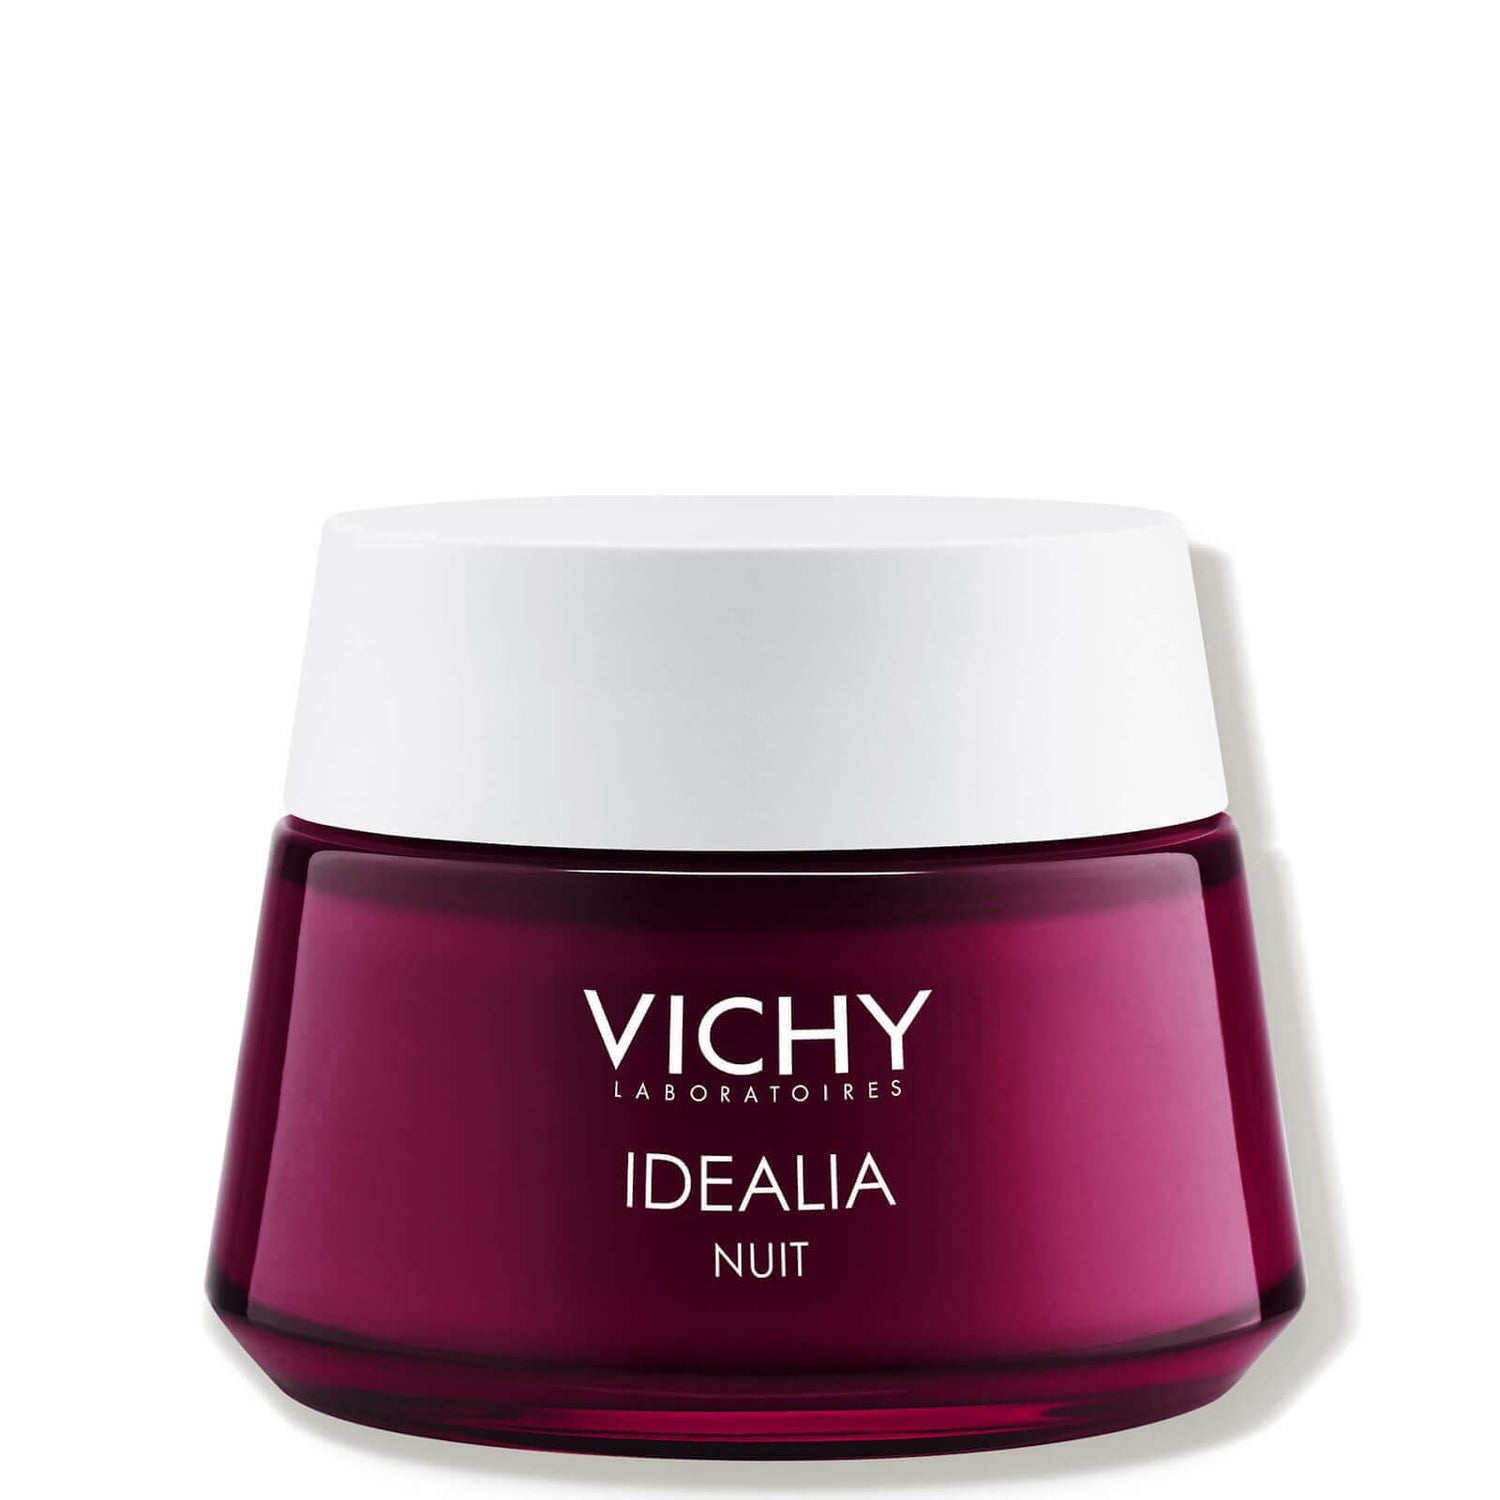 Vichy Idealia Nuit Cream (1.7 oz.)